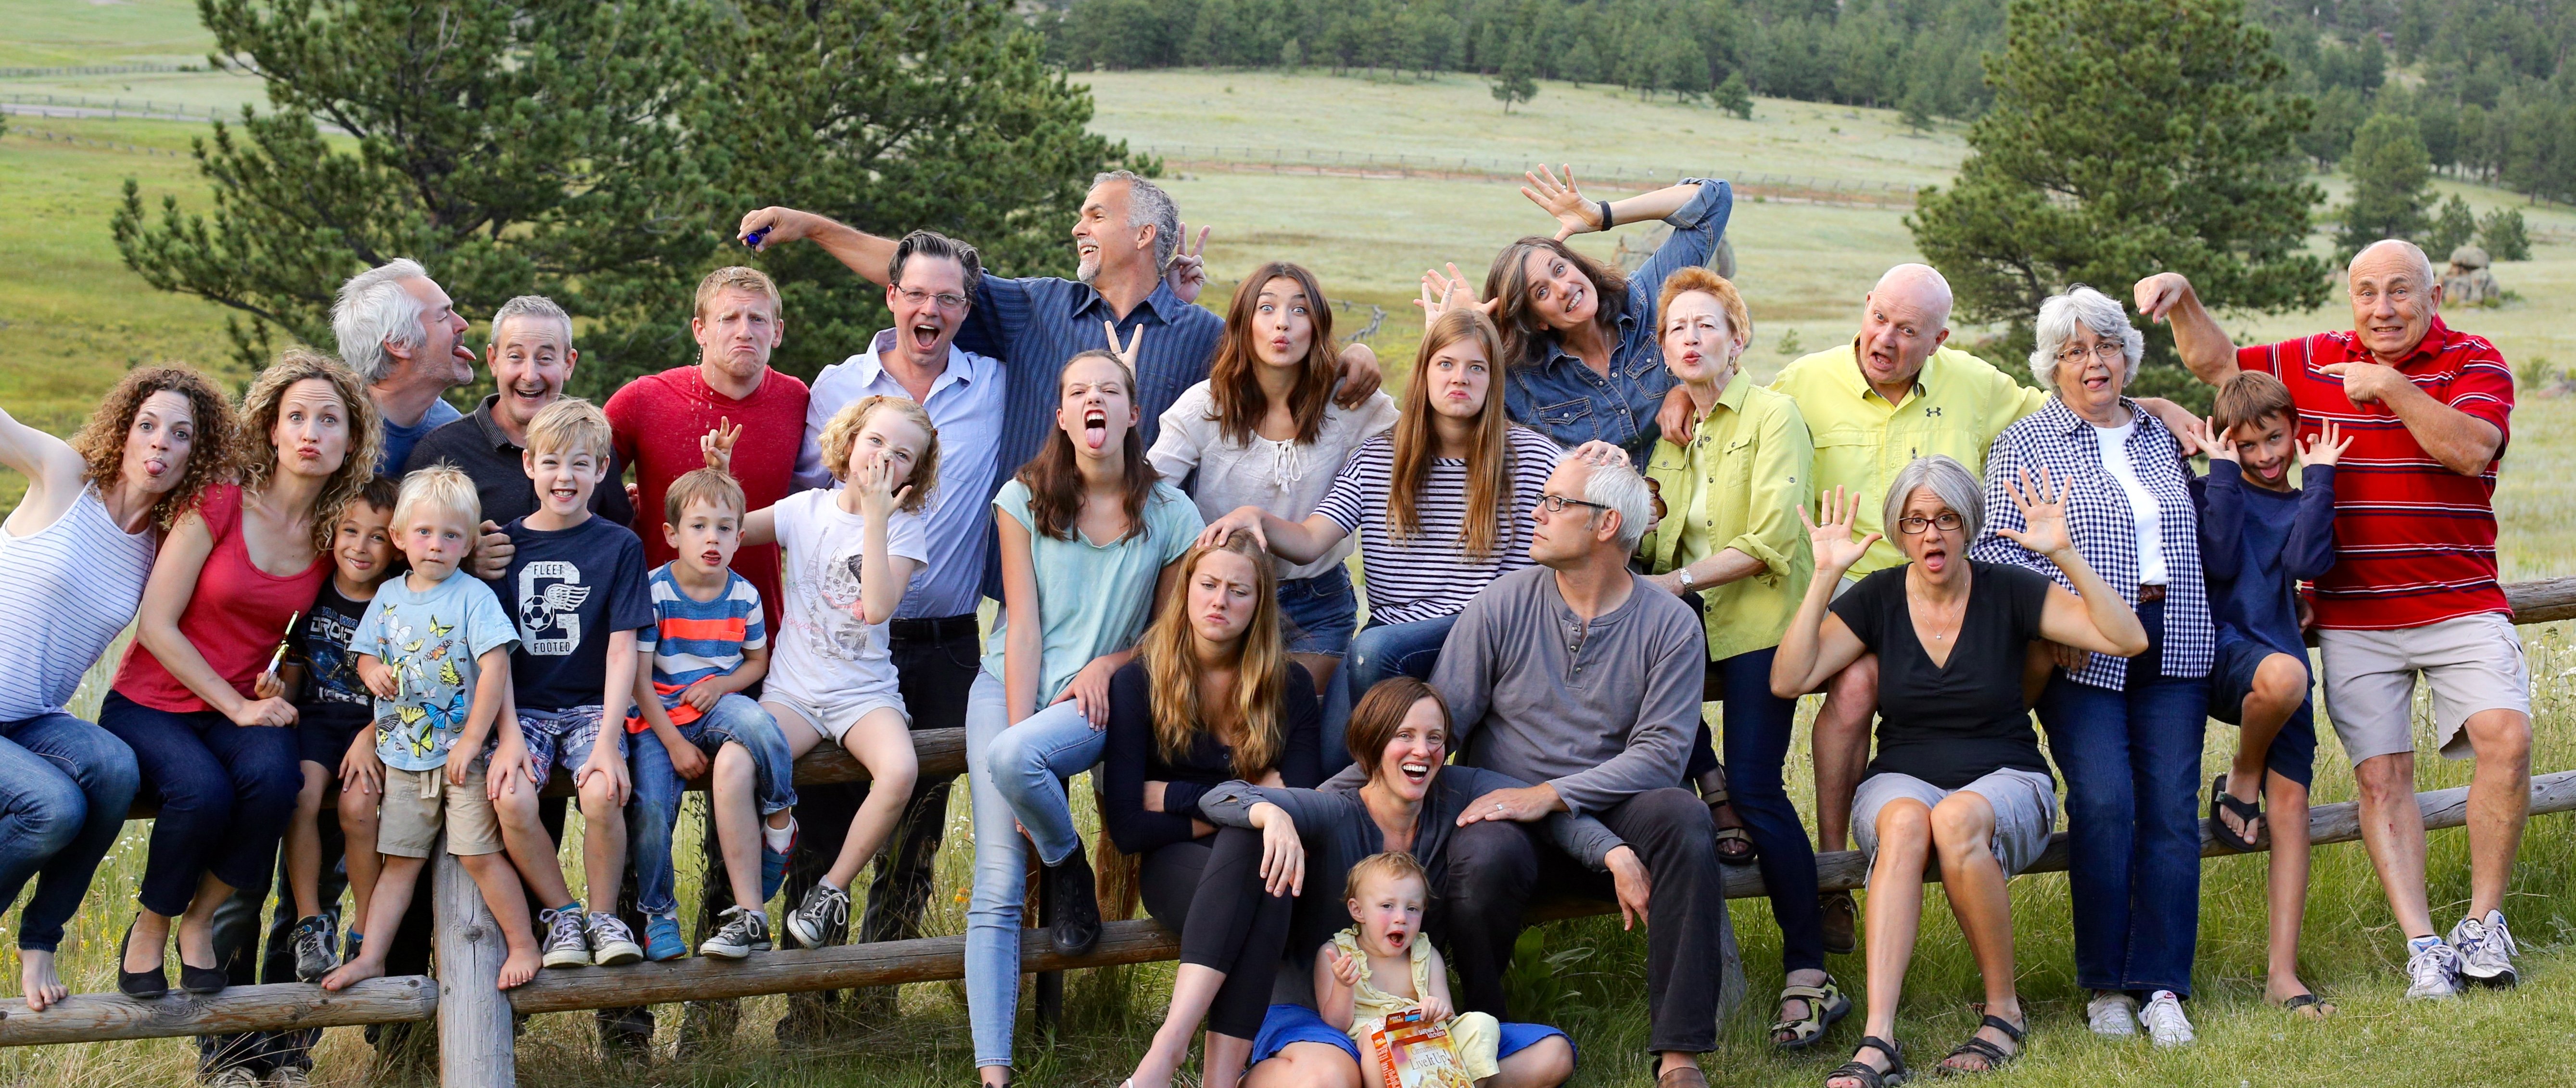 Family Reunion in Estes Park, July 2015